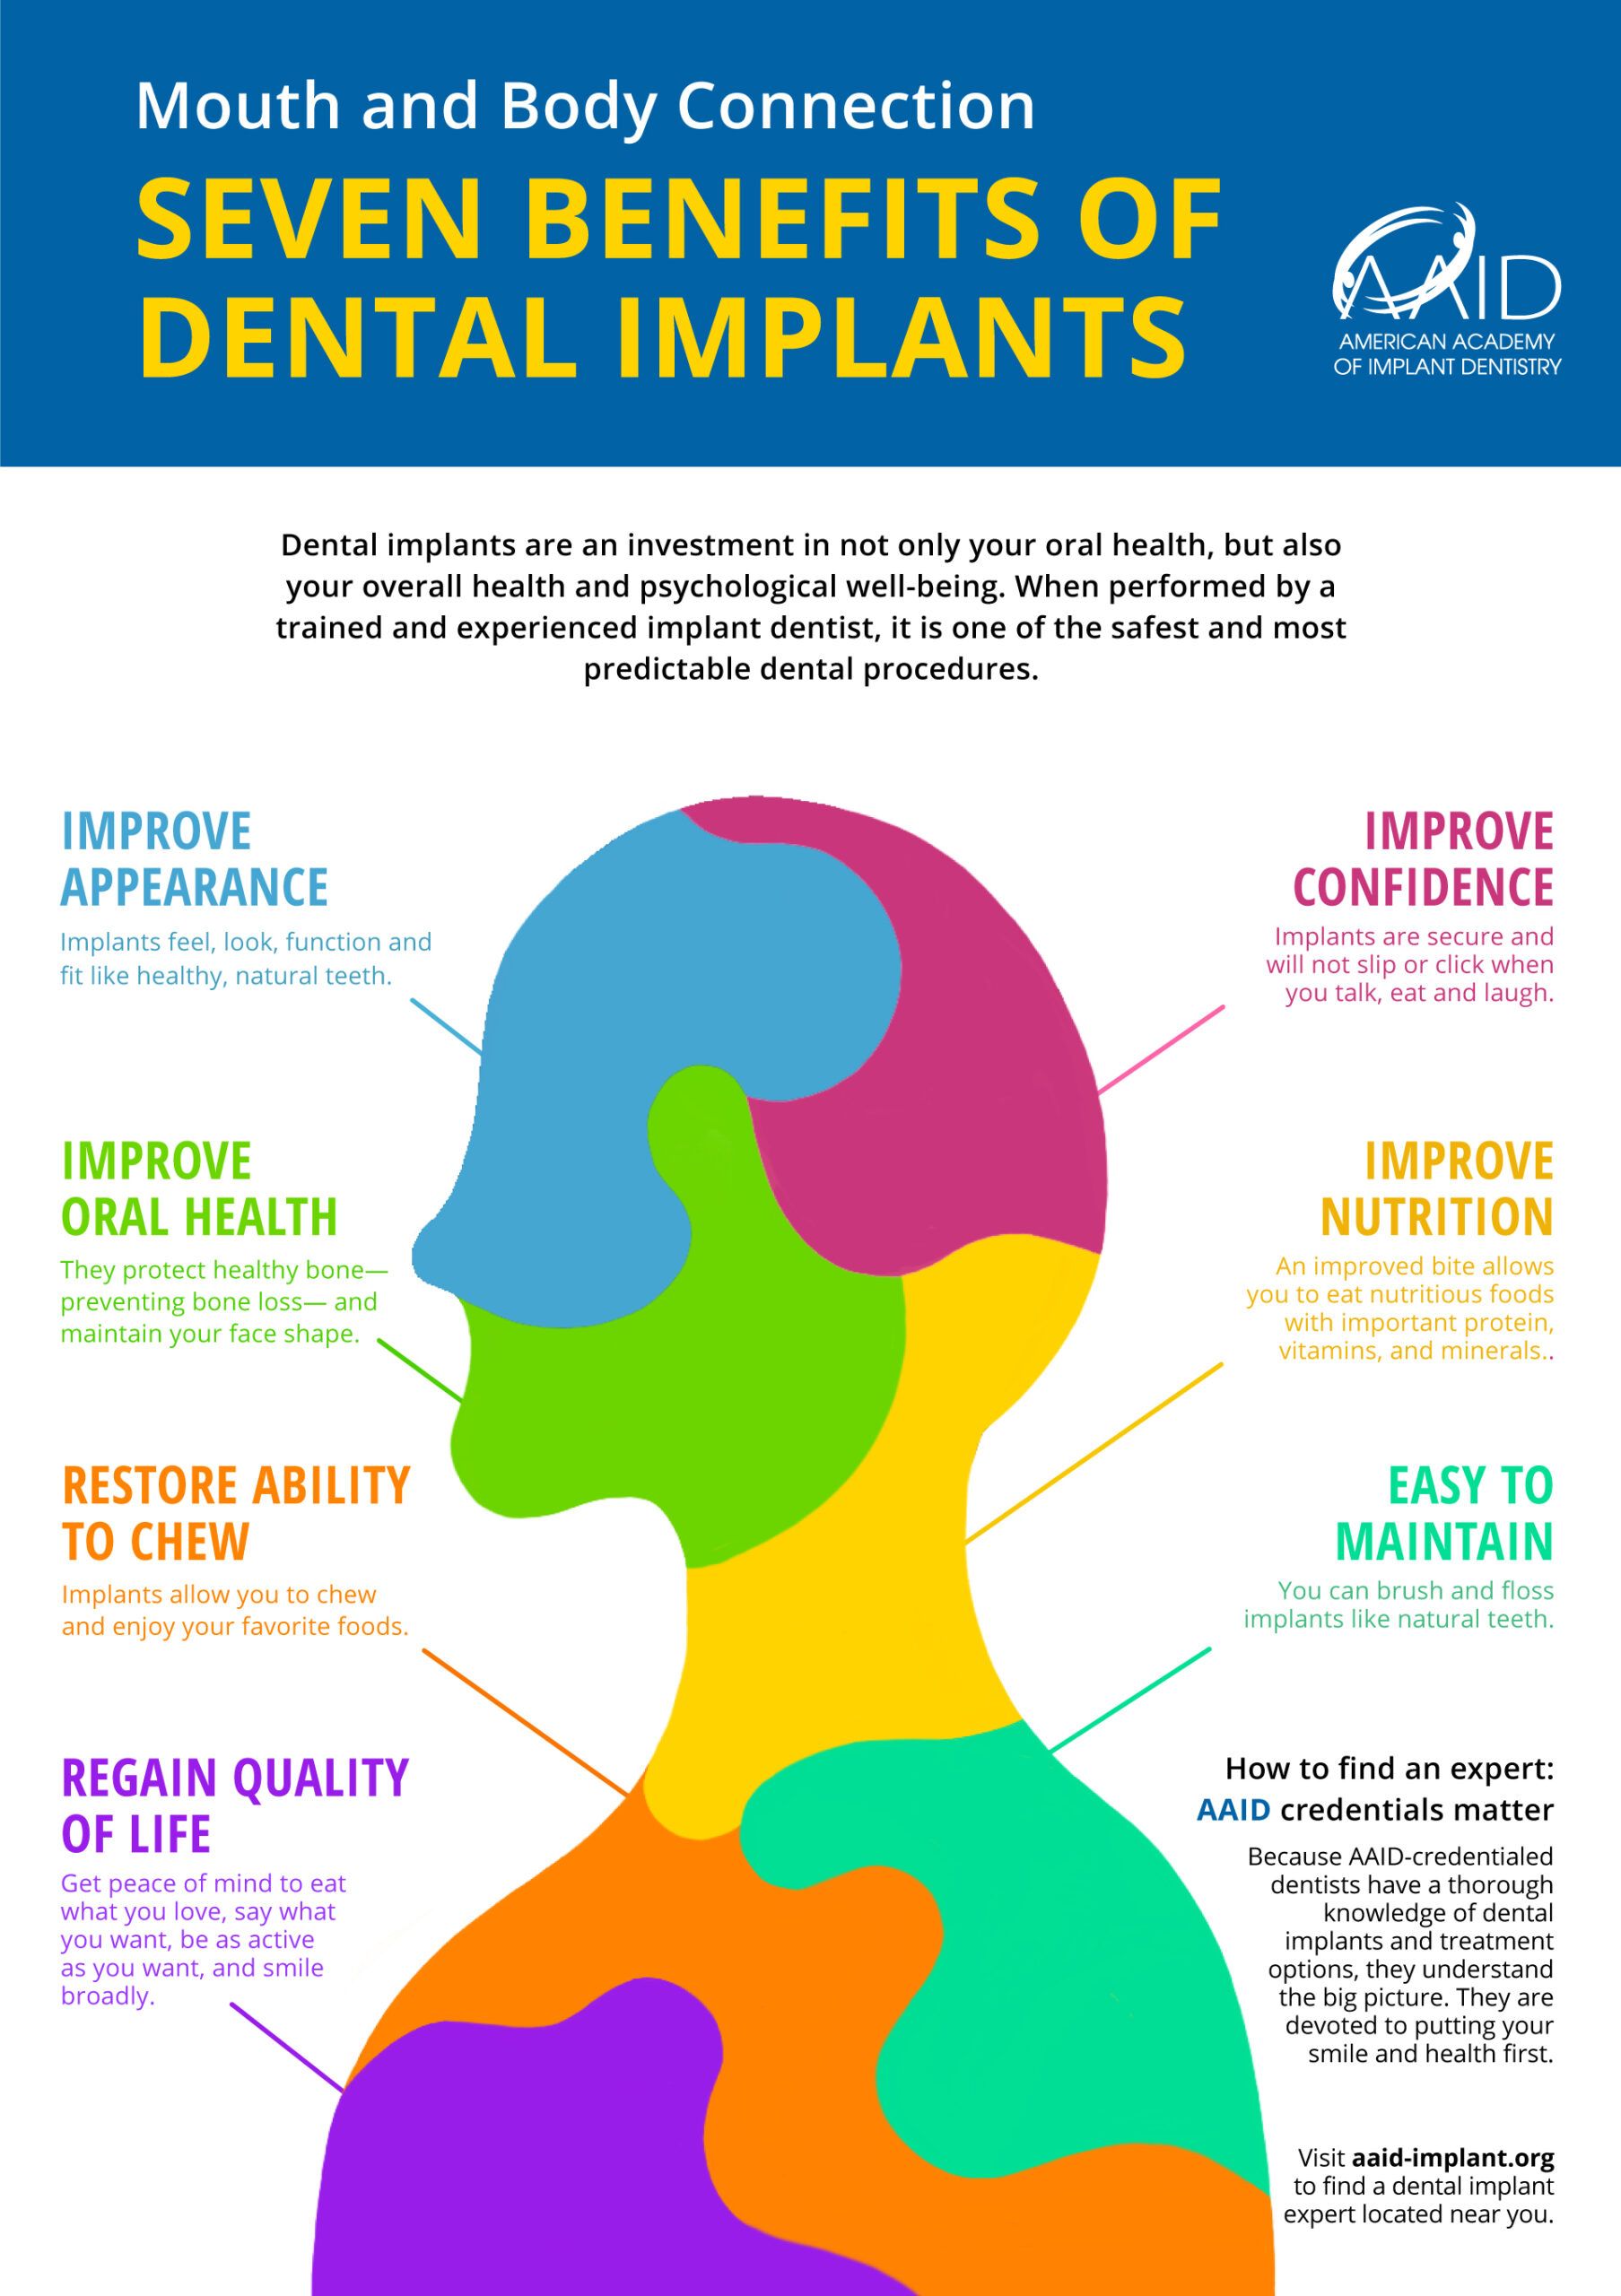 Seven benefits of dental implants